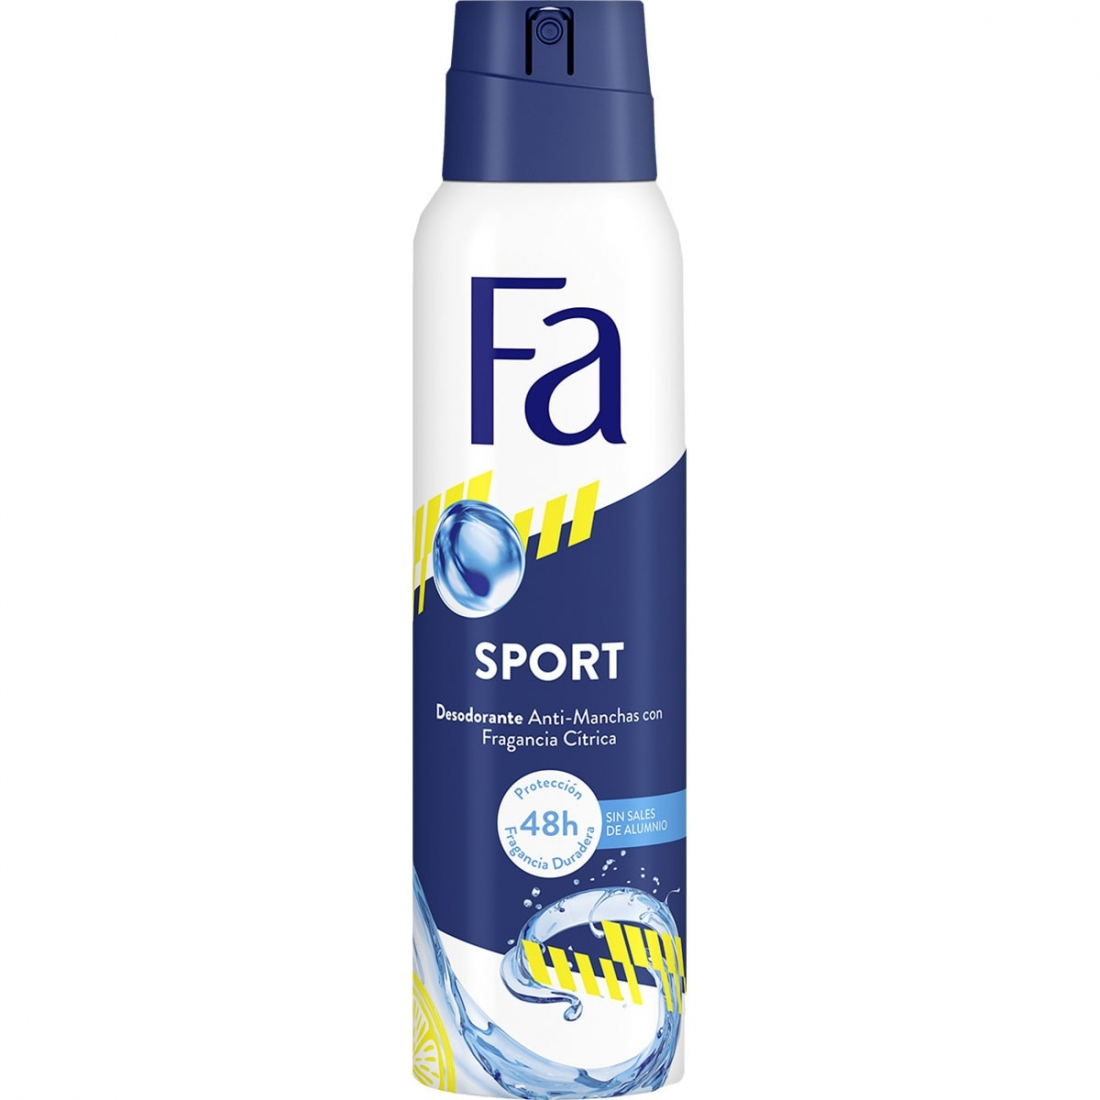 'Aqua Aquatic Fresh' Spray Deodorant - 150 ml